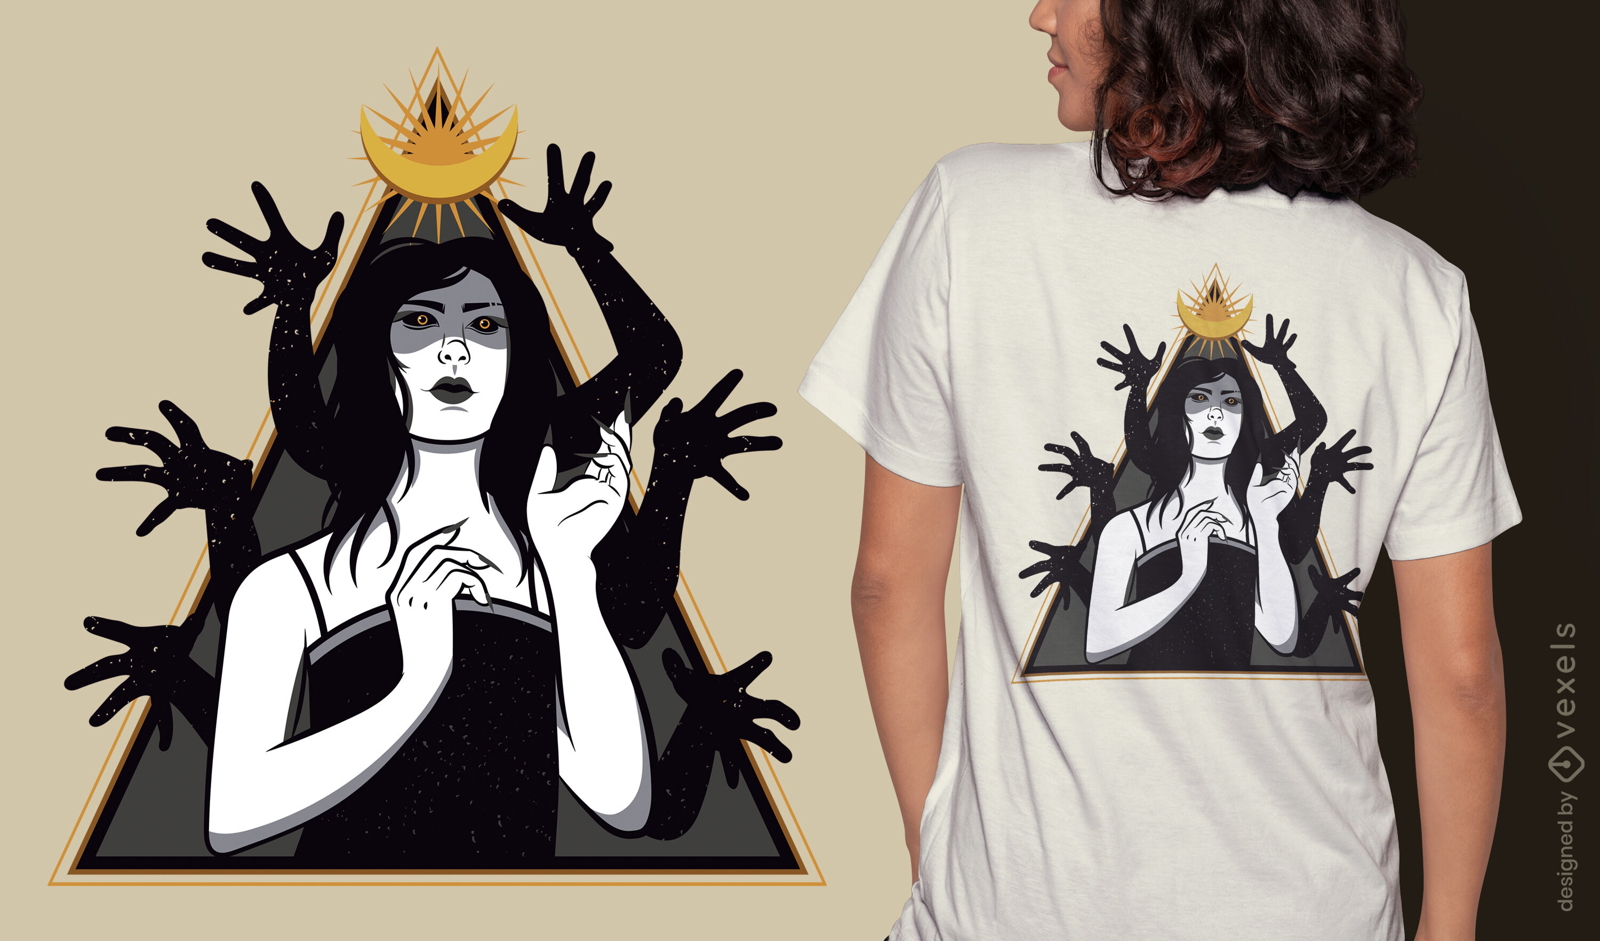 Dark sorceress with creepy hands t-shirt design